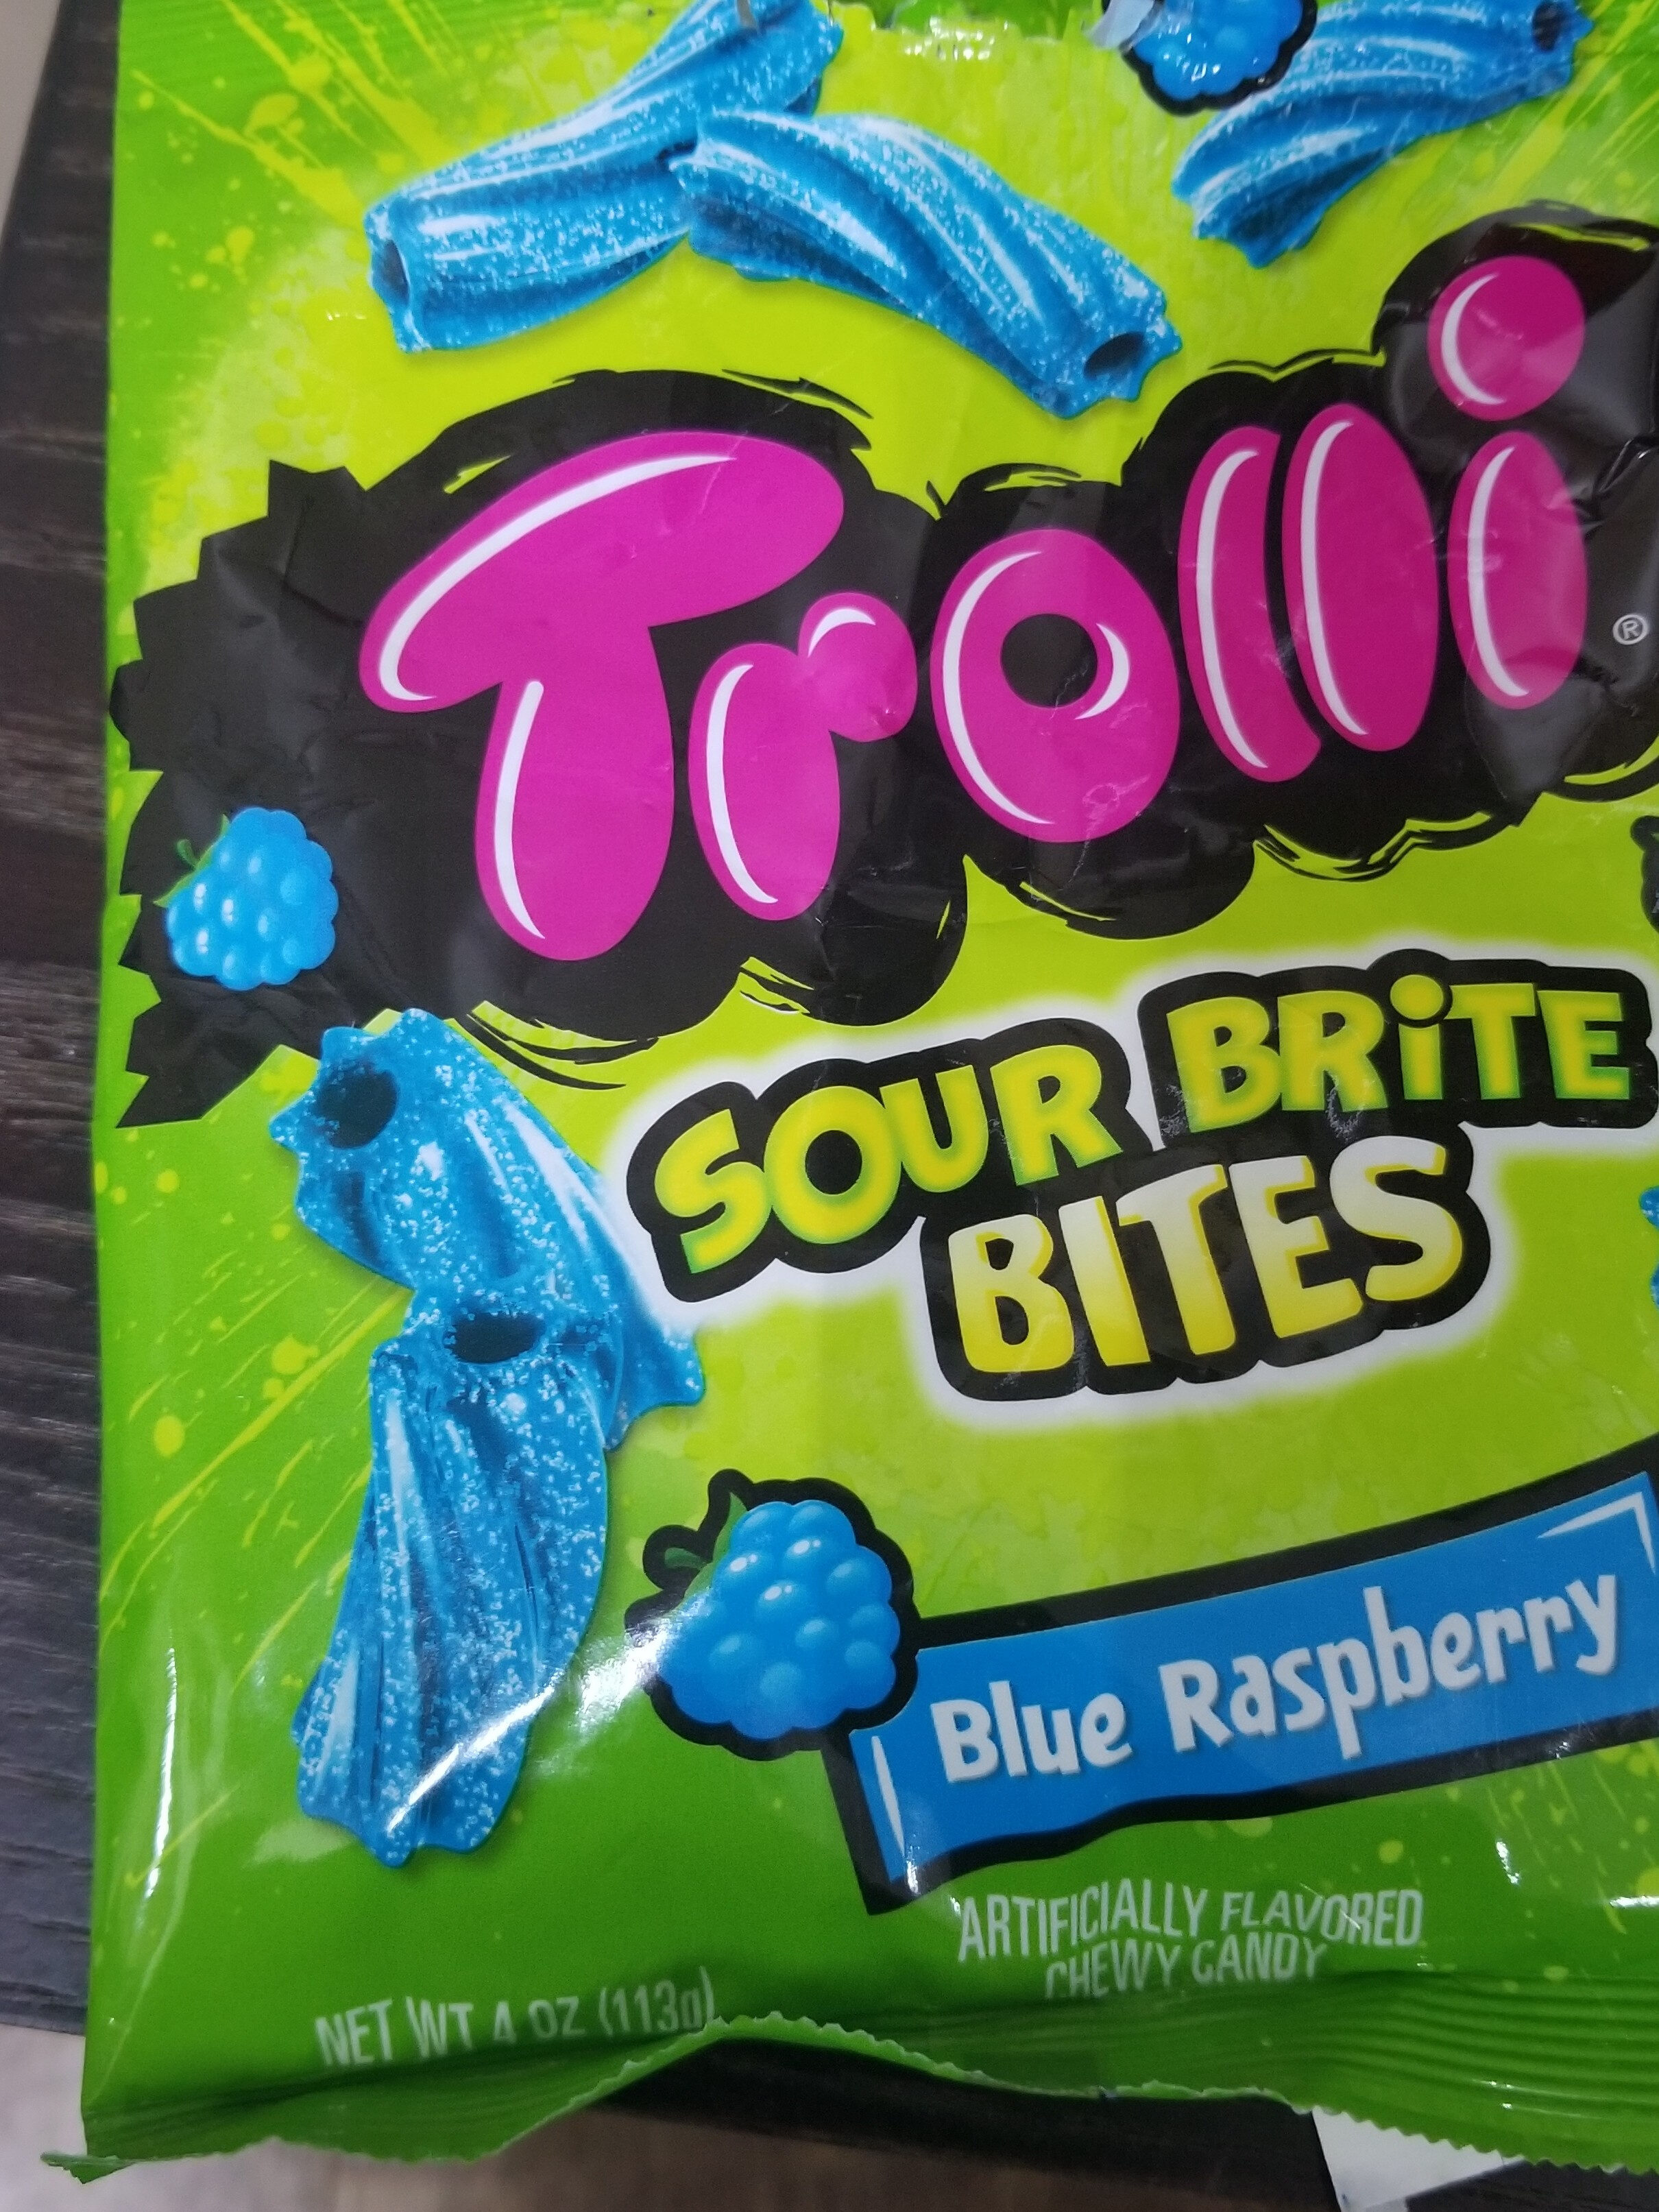 Trolli, sour brite bites chew candy, blue raspberry - Product